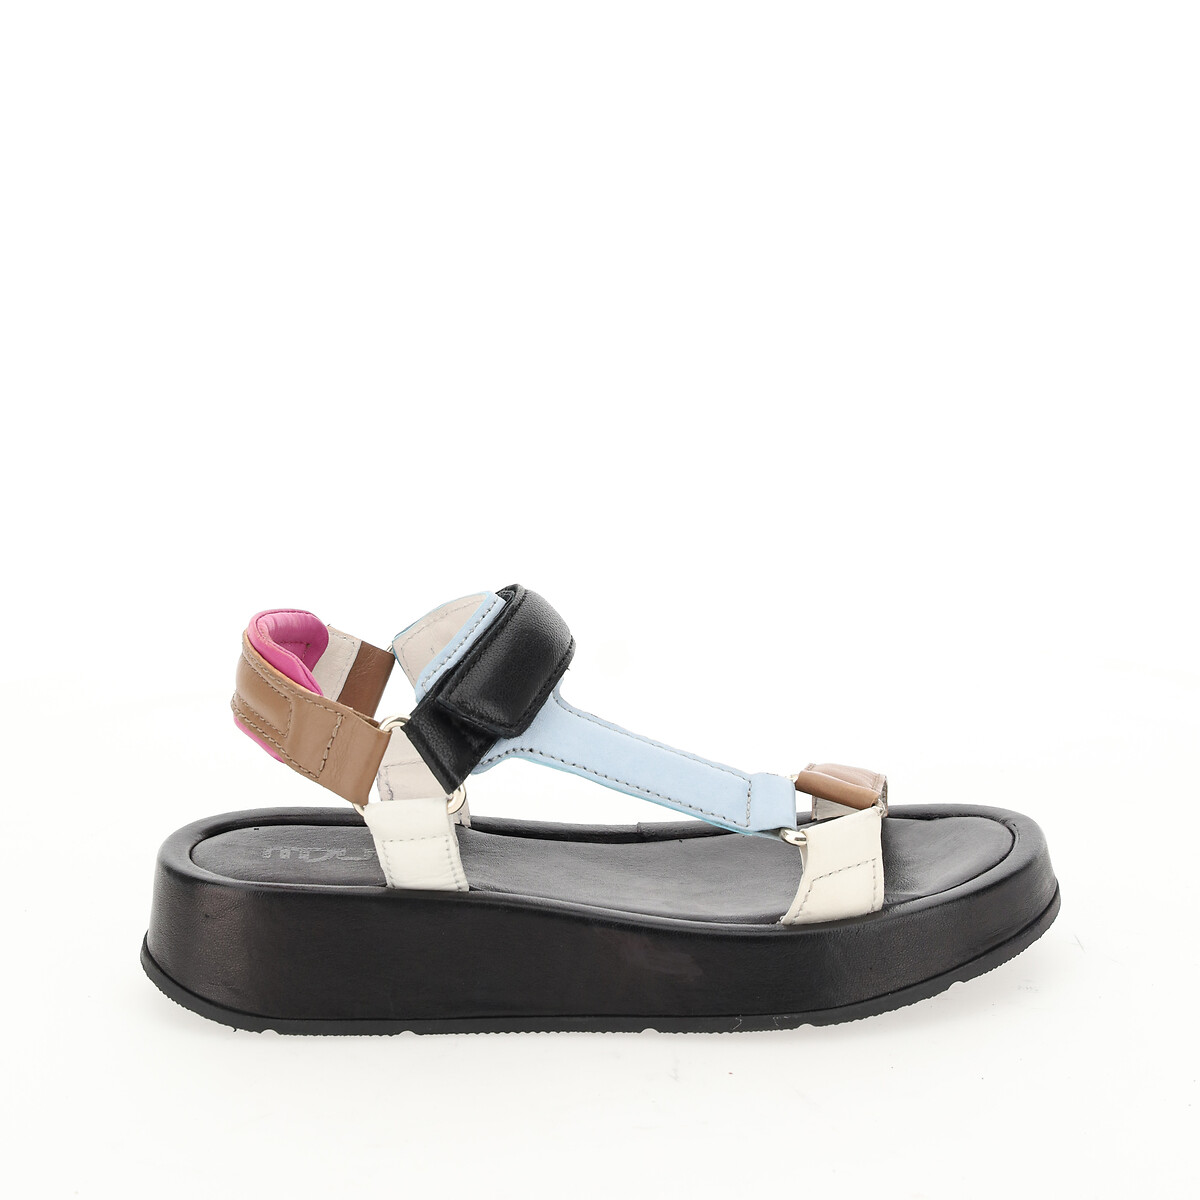 Leather wedge sandals, black/multi-coloured, Mjus | La Redoute